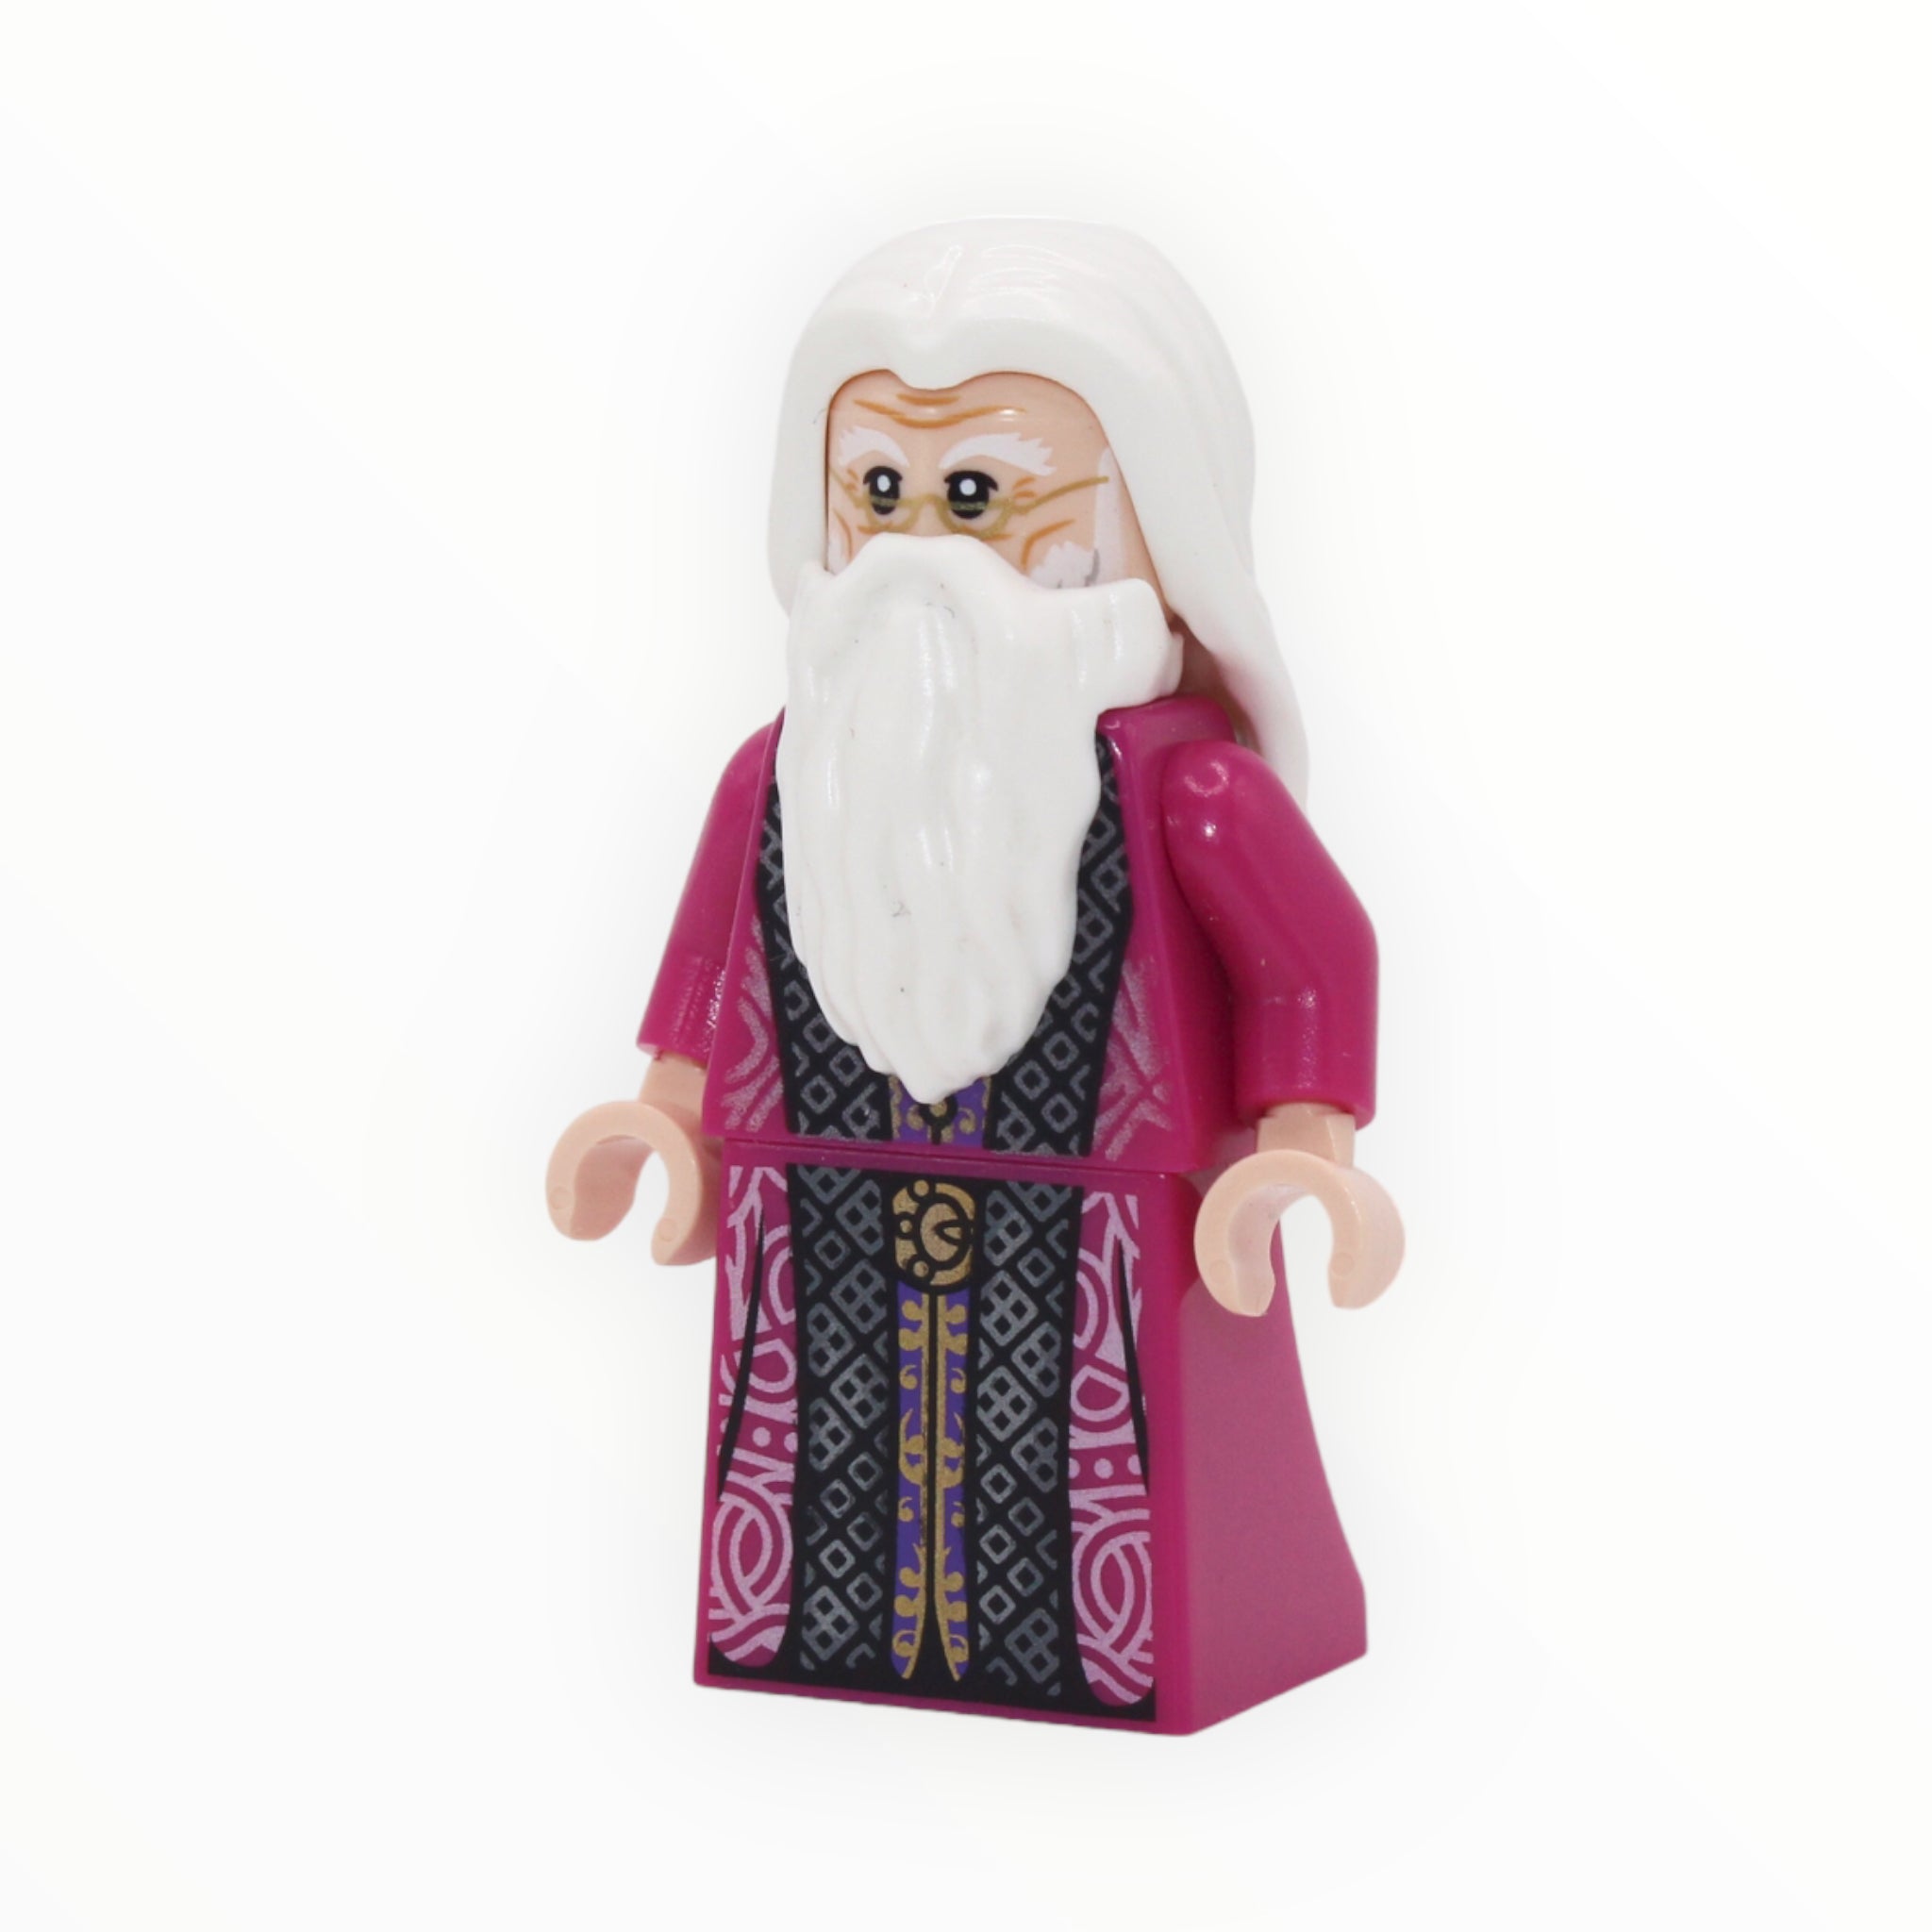 Professor Albus Dumbledore (magenta robe, skirt piece)